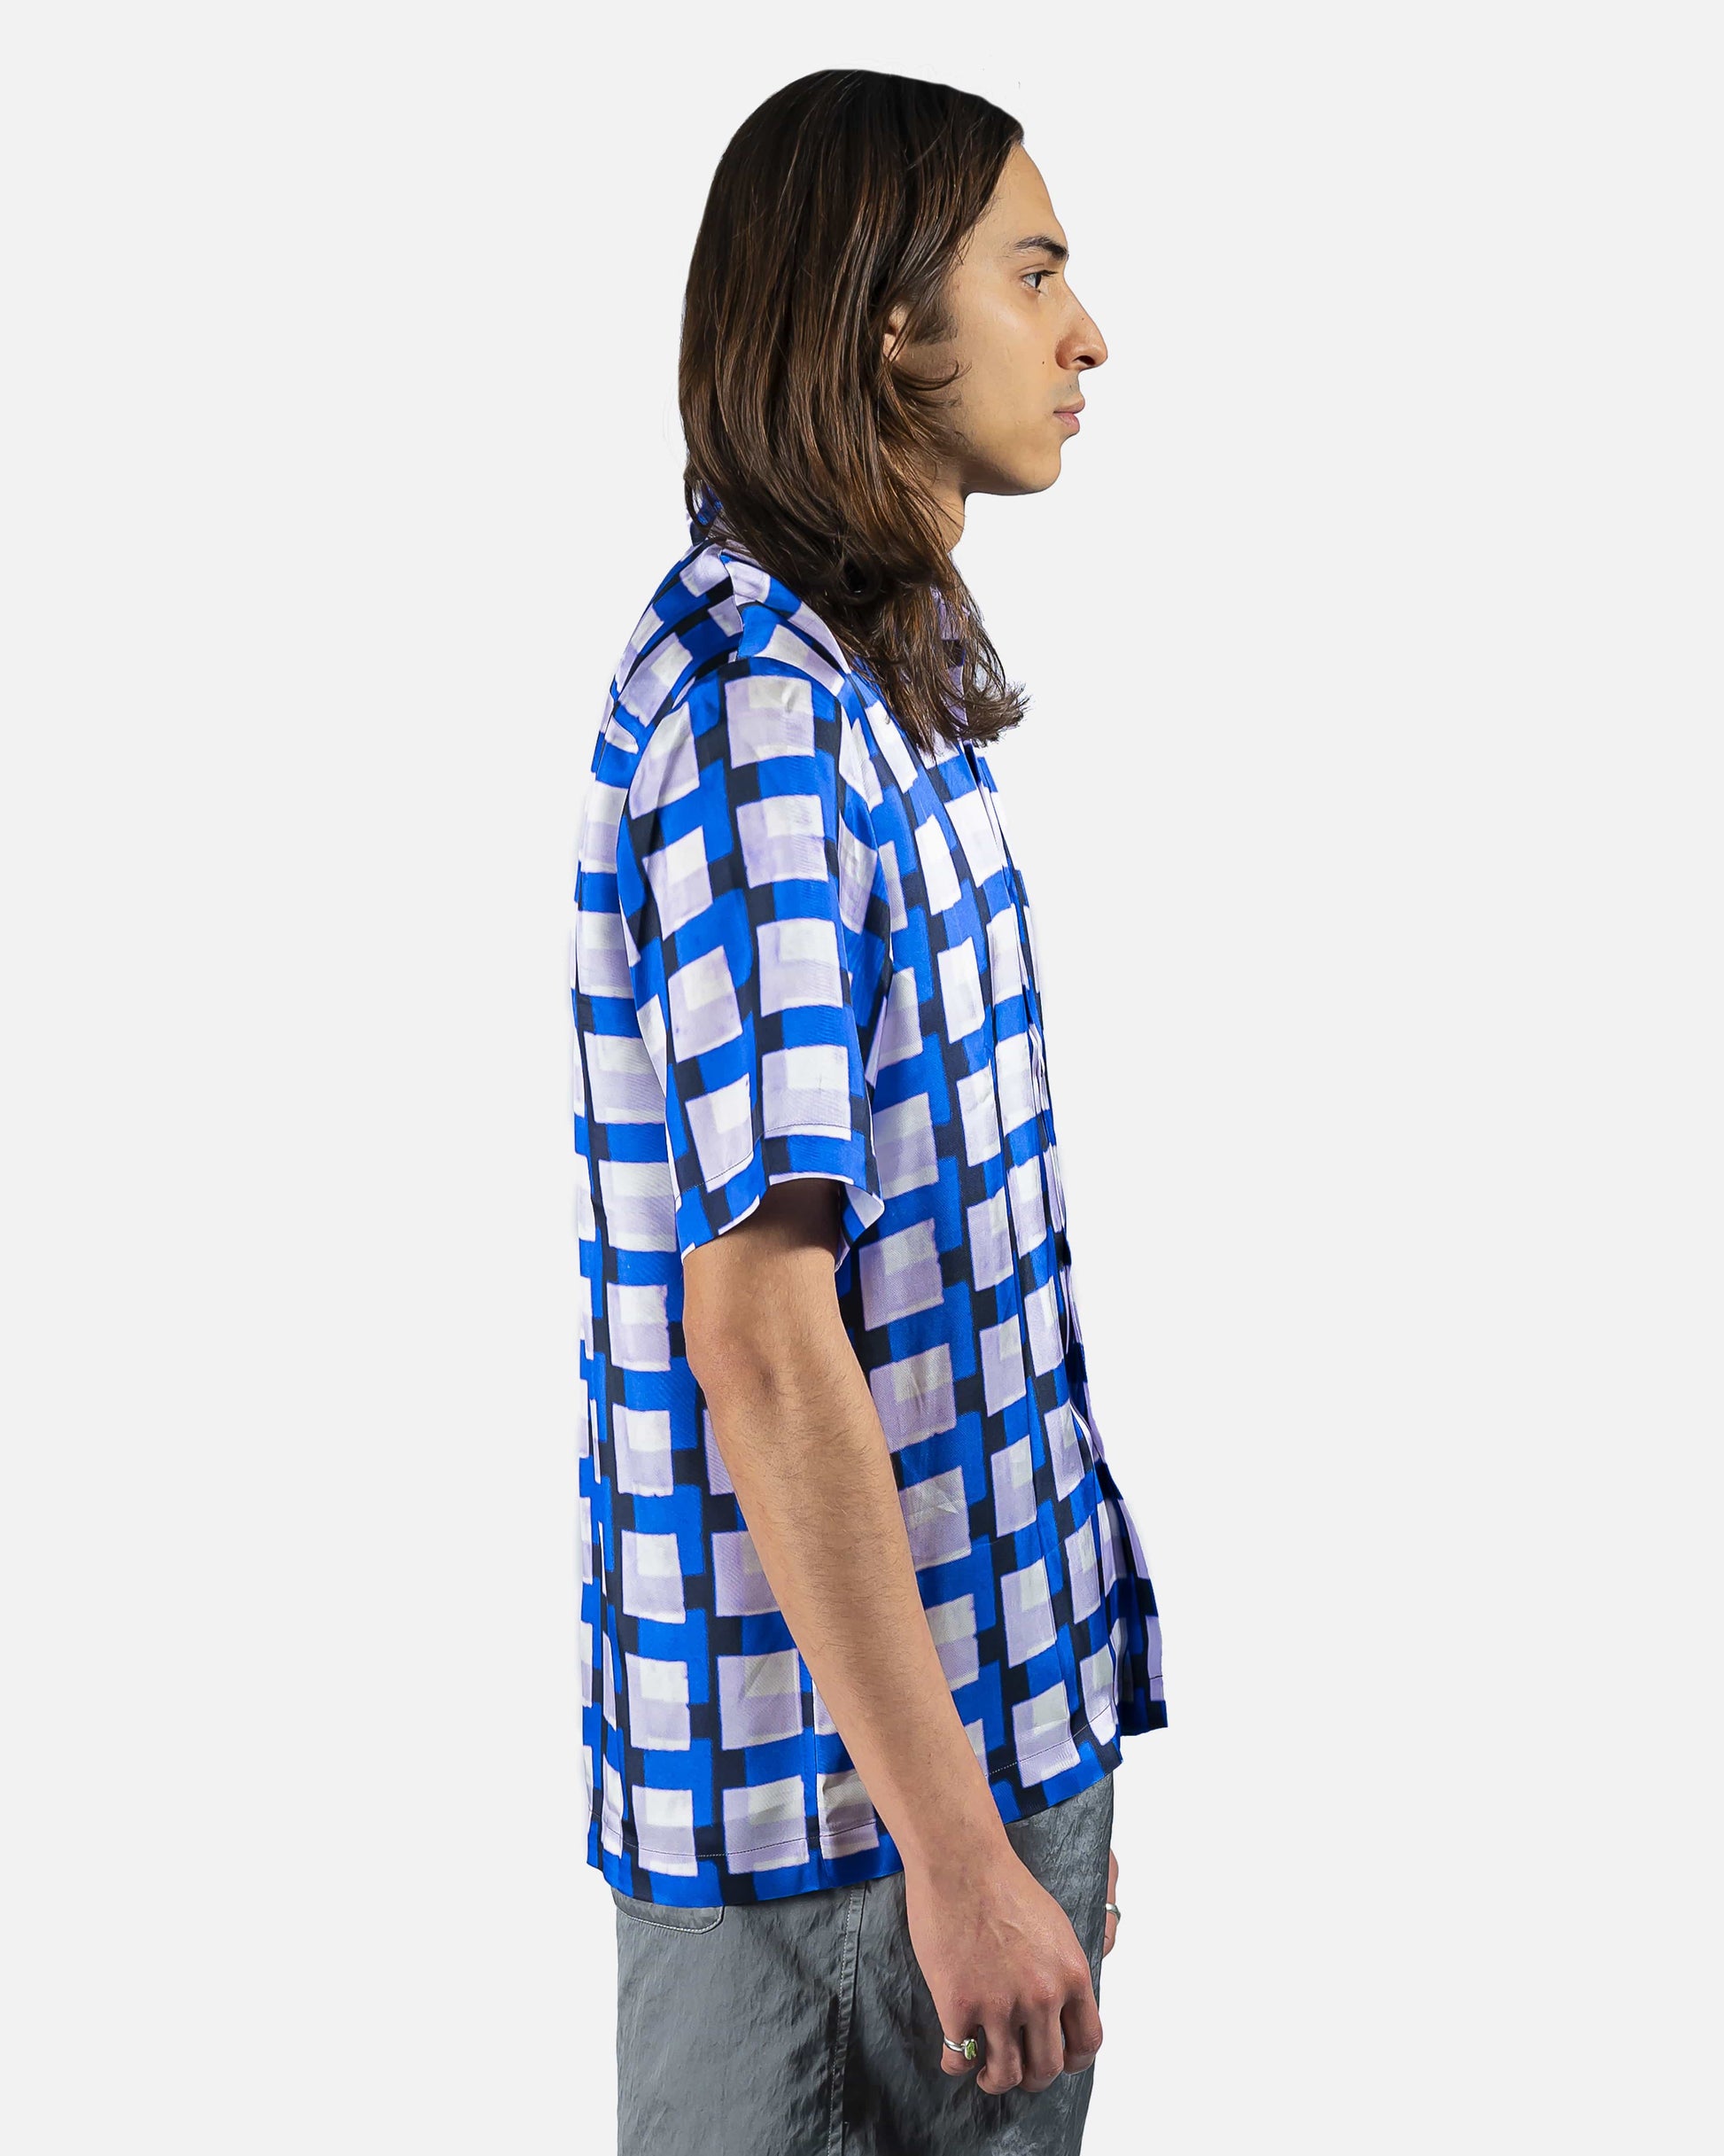 Dries Van Noten Men's Shirts Clasen Button Up in Blue